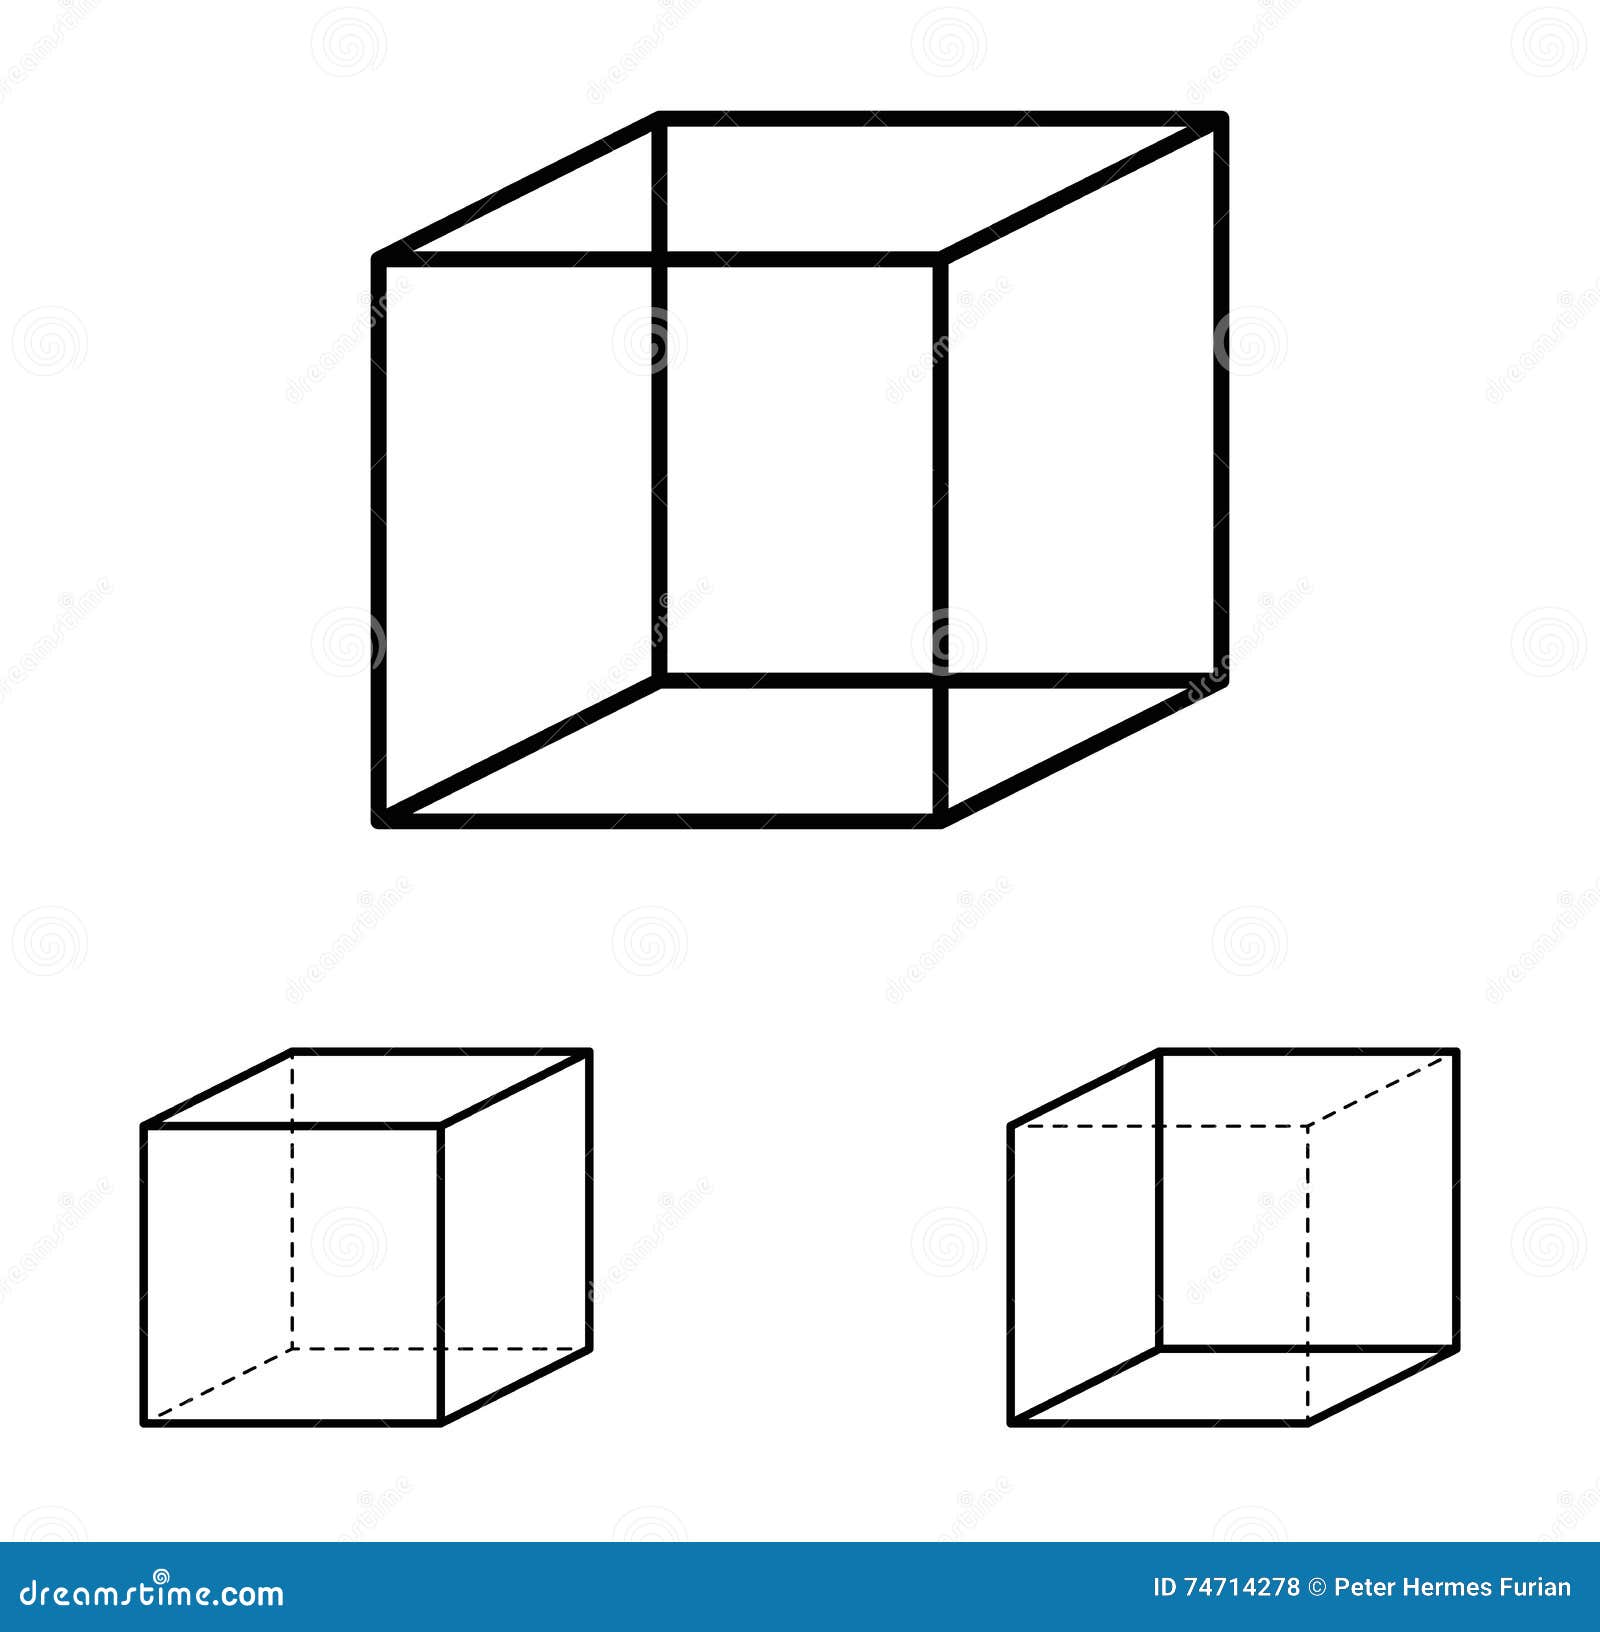 necker cube optical illusion